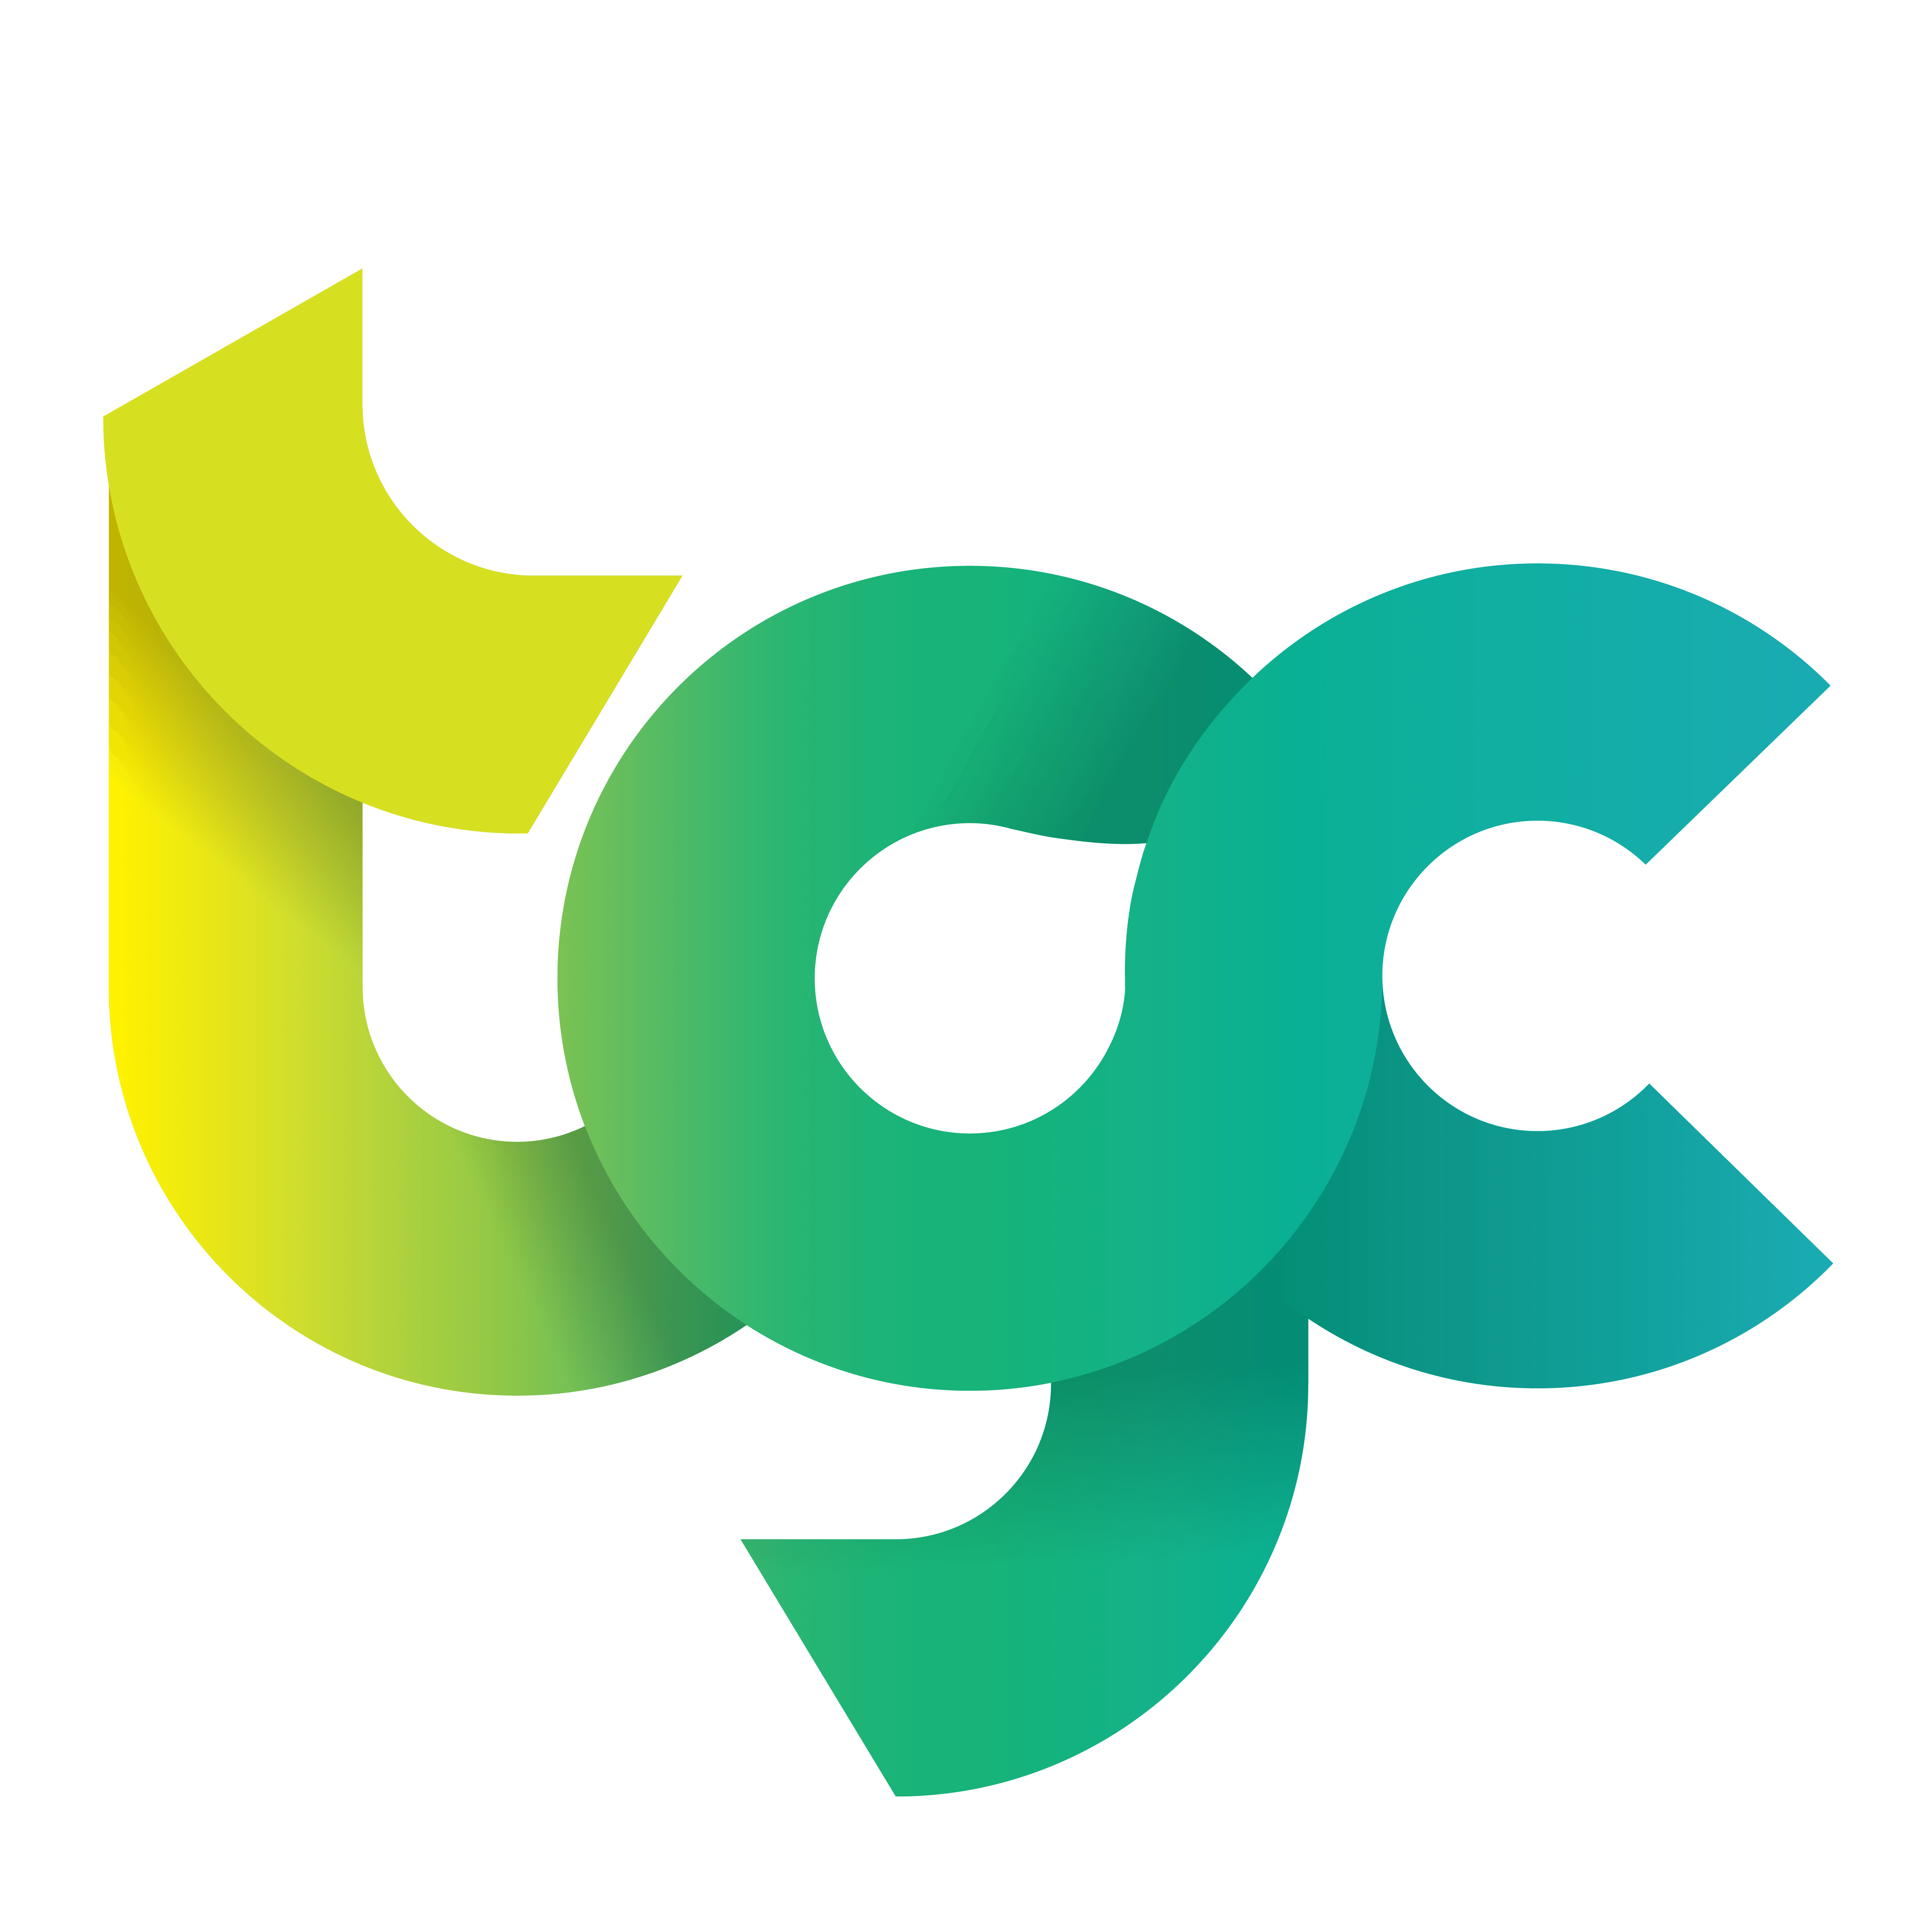 TGC Logo - Tehran Game Convention